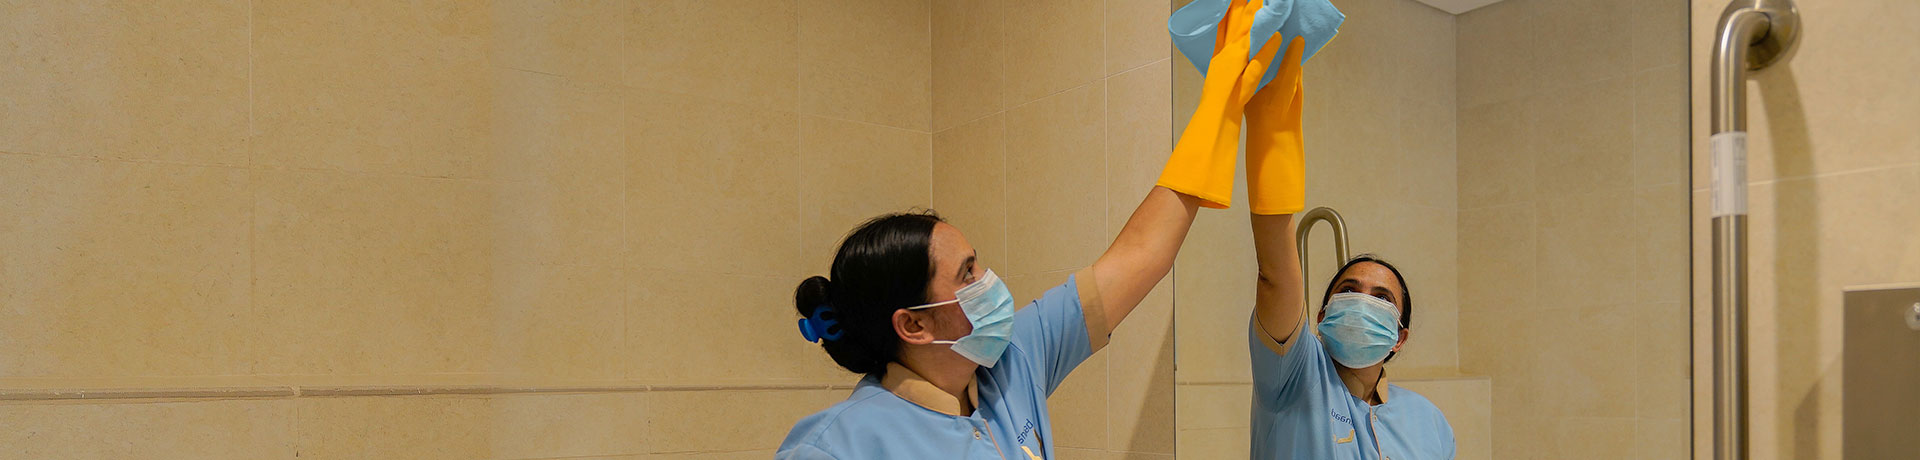 Hygiene Cleaning Services in Dubai, UAE - Isnaad